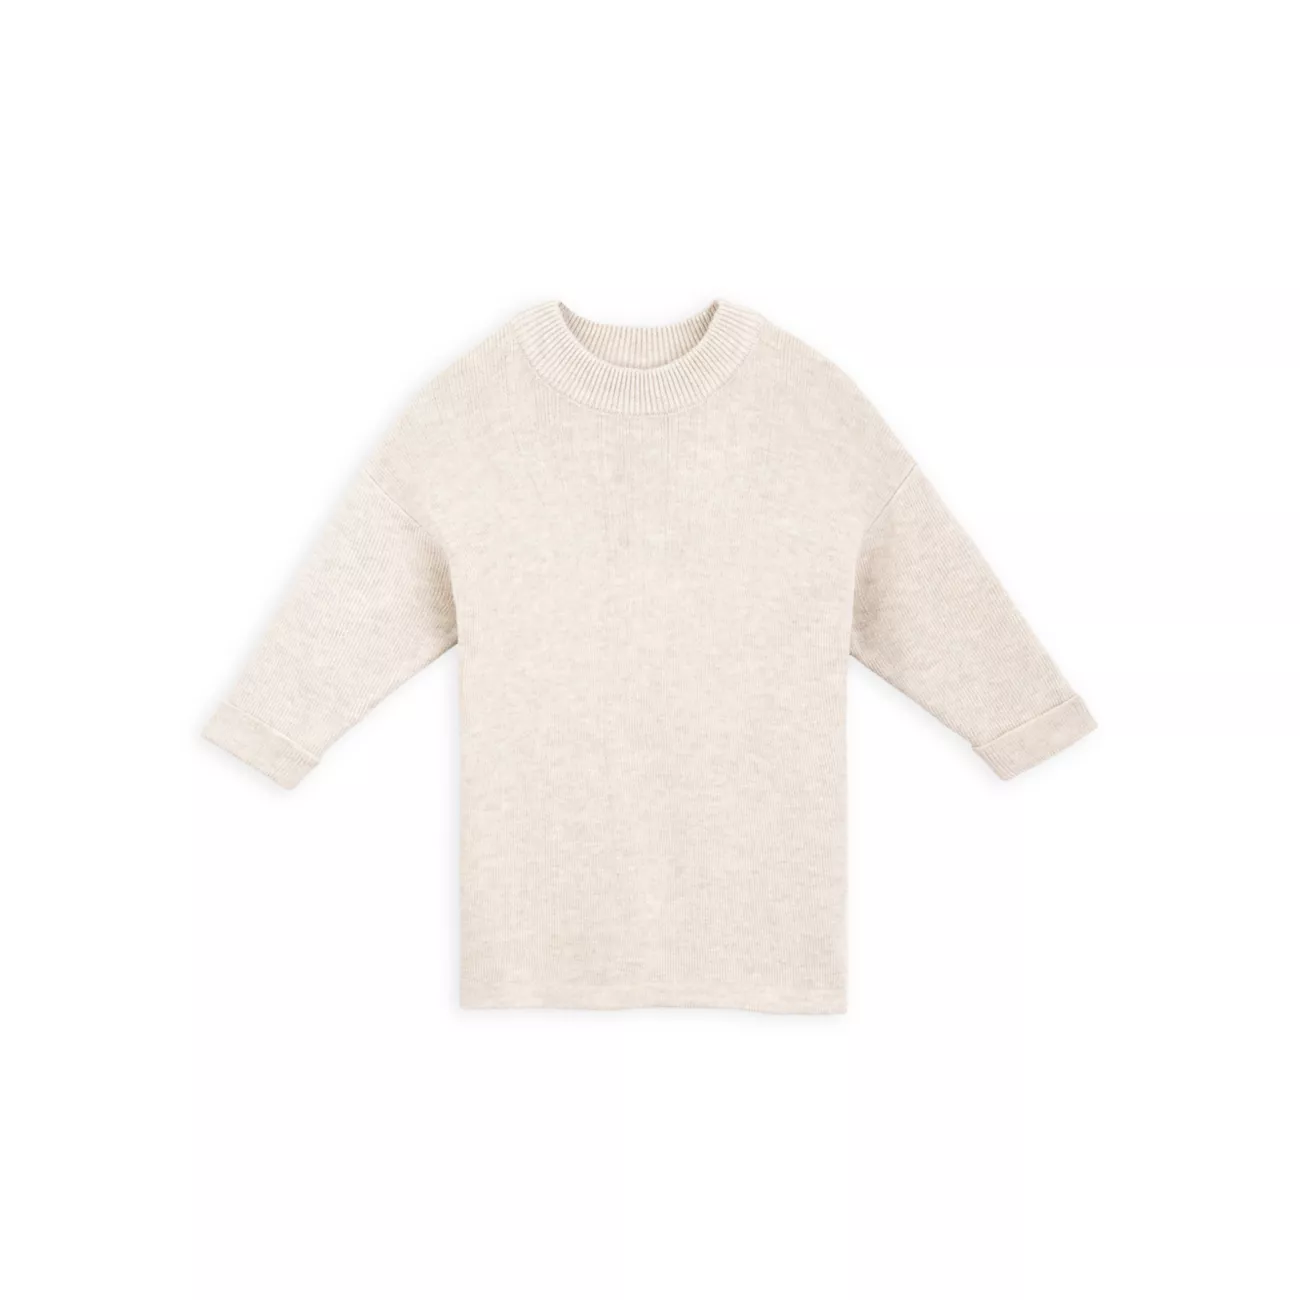 Baby Girl's Heather Crewneck Sweater Miles the Label